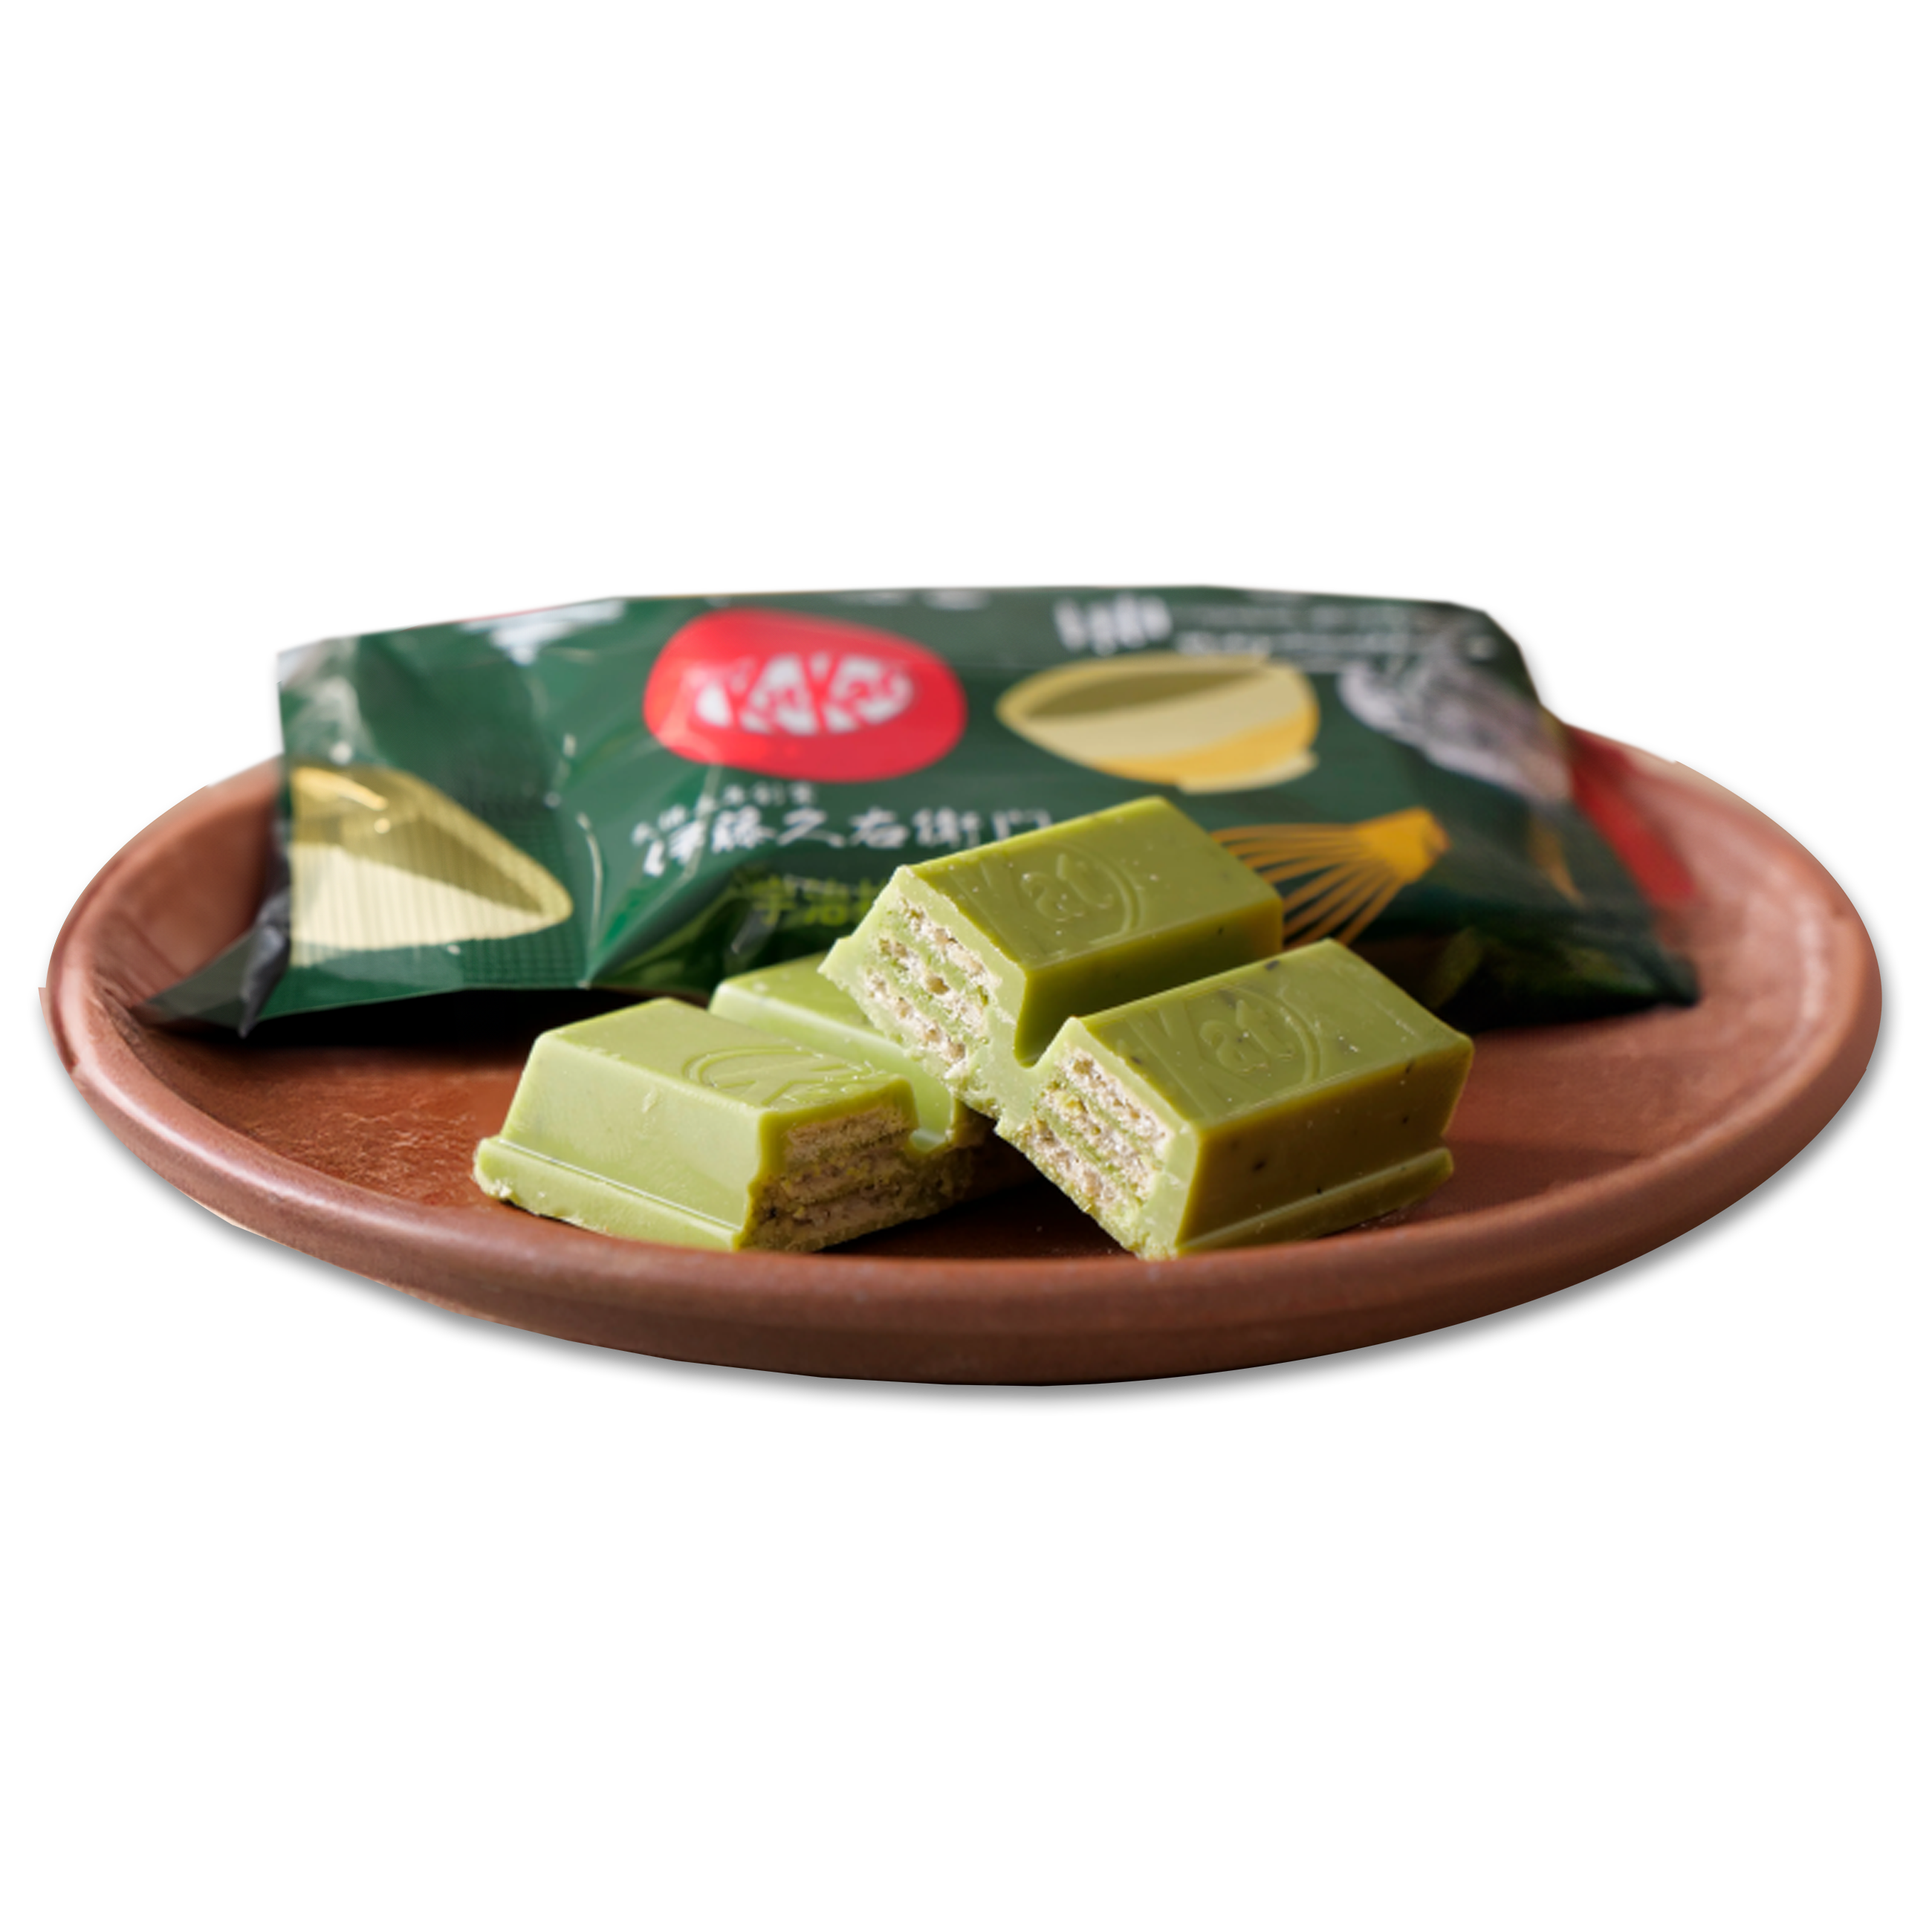 KitKat Matcha green tea: A special KitKat variety from Japan